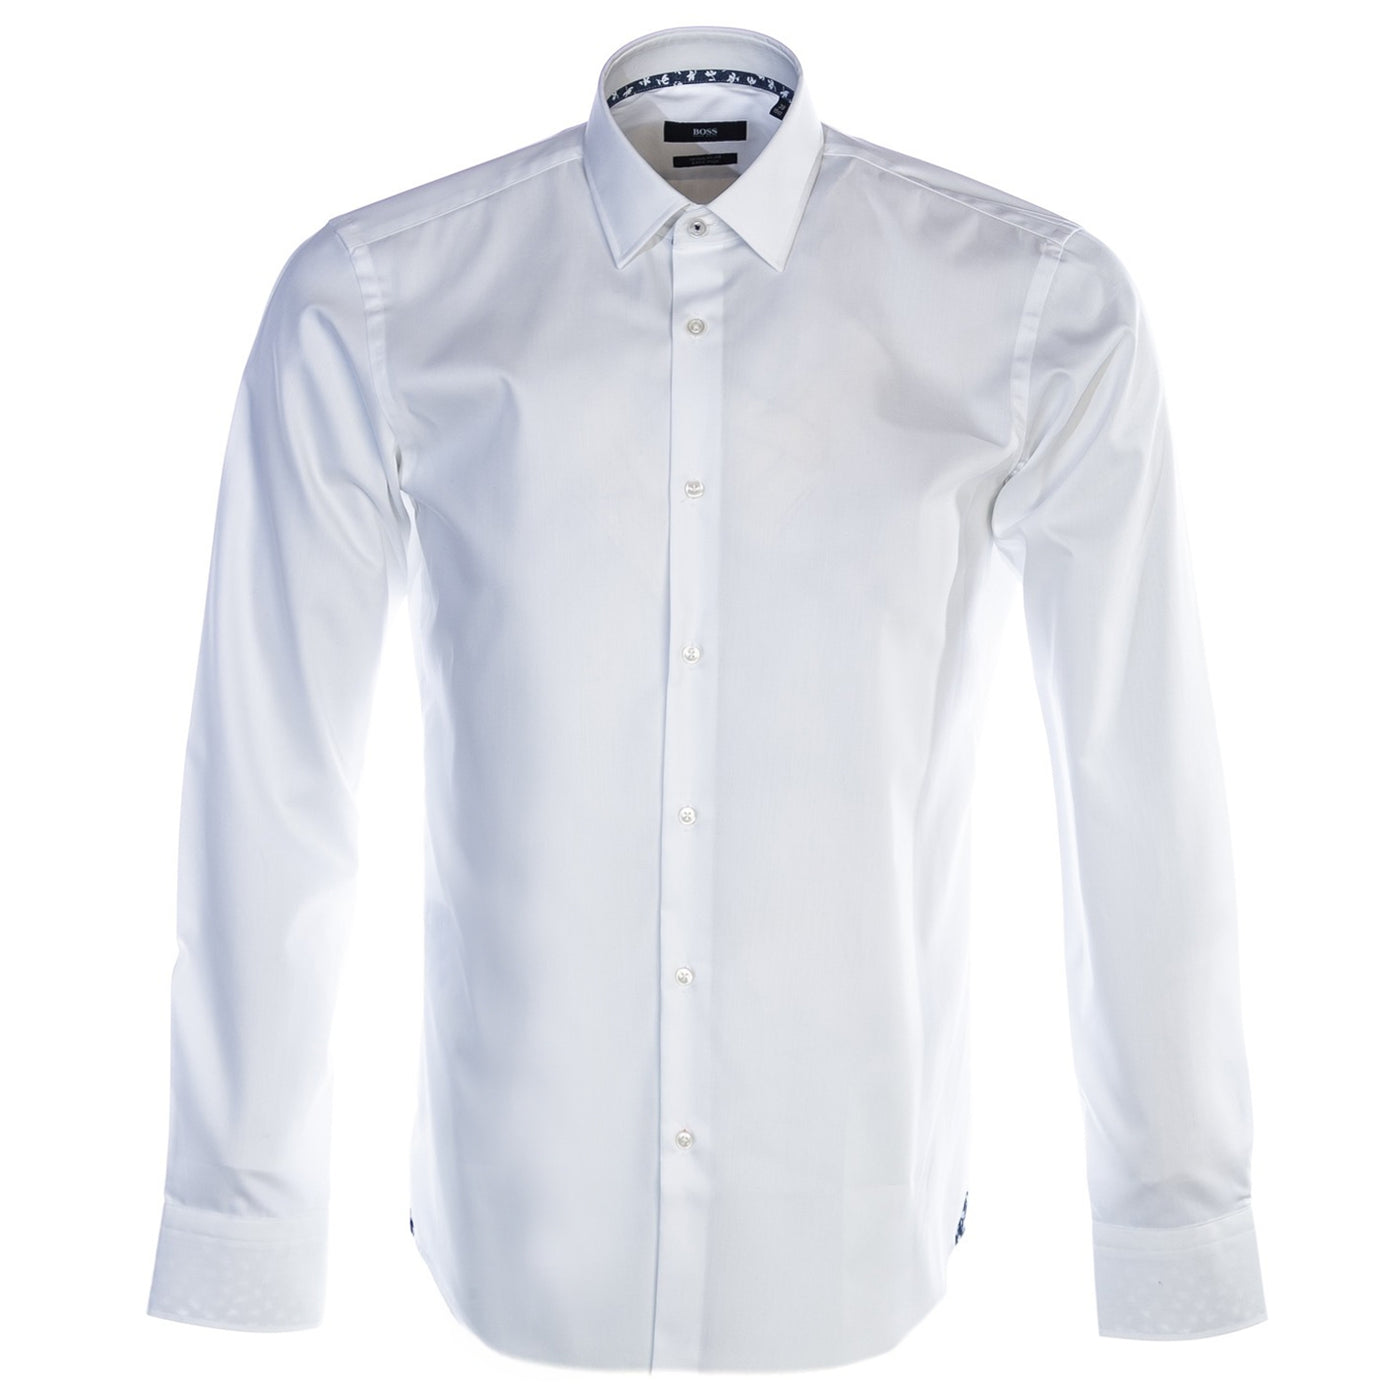 BOSS Gelson Shirt in White